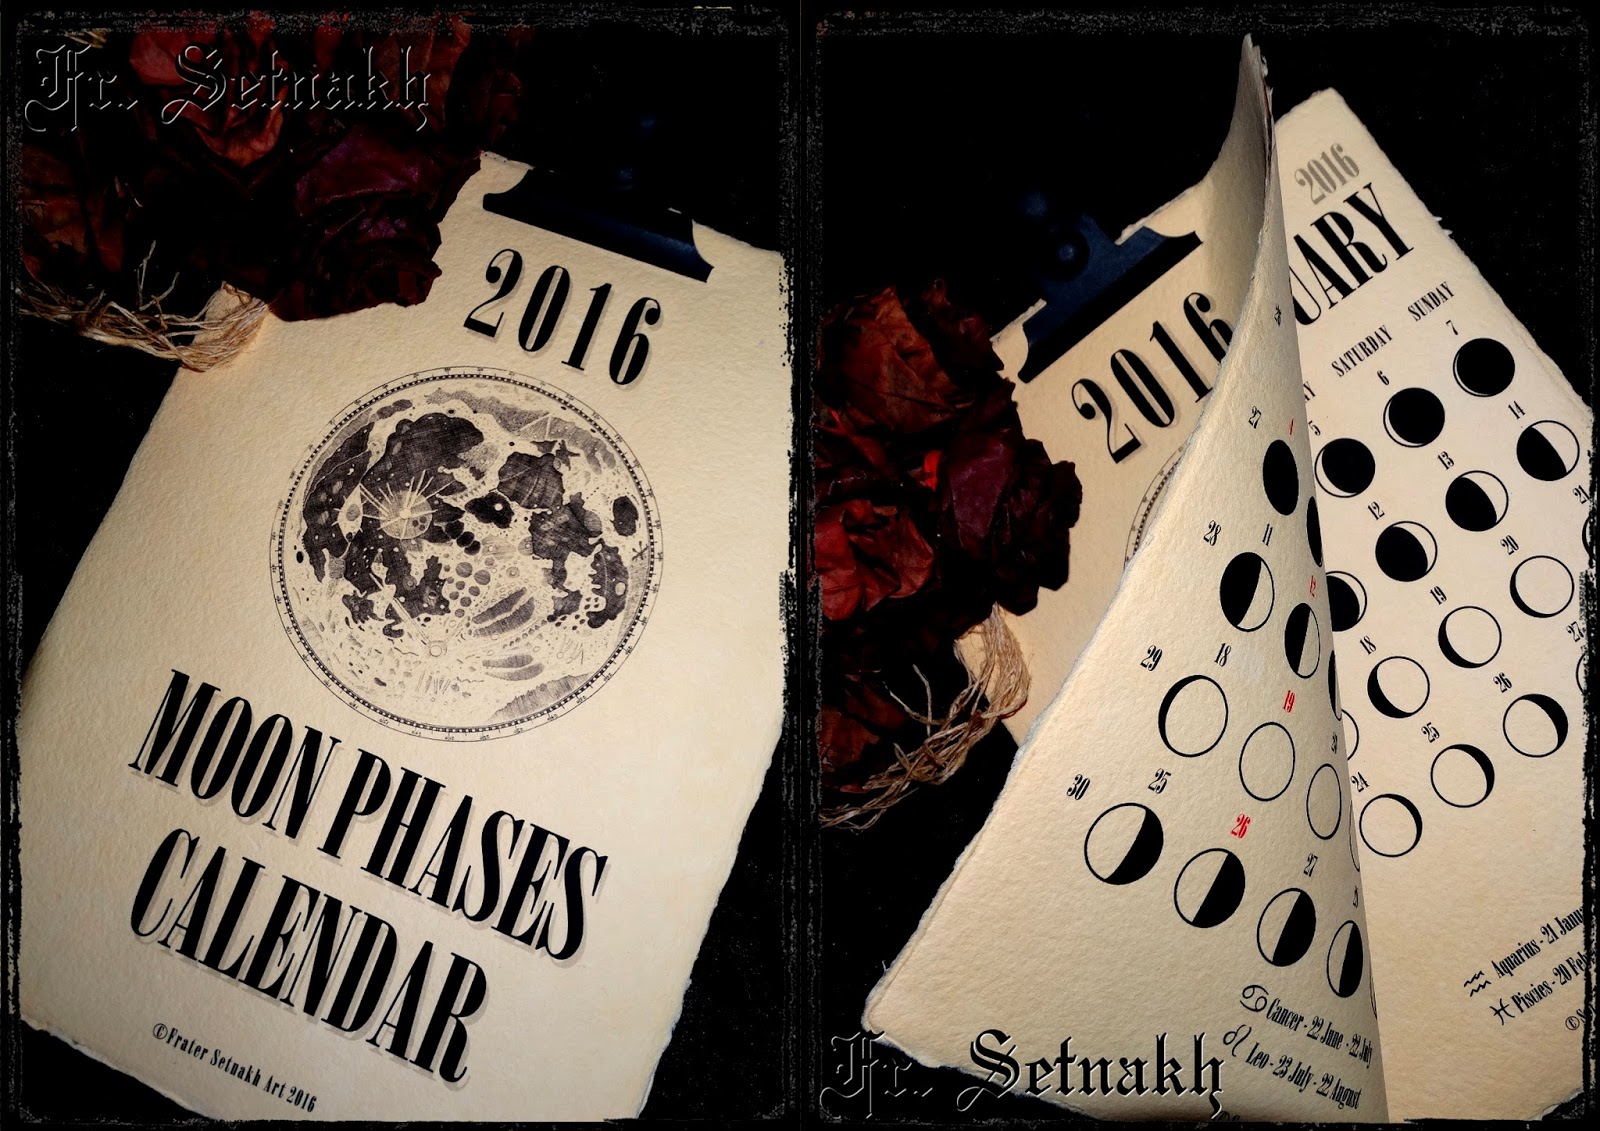 Frater Setnakh Ritual Art: Moon phases calendar 2016 / Lunar Calendar